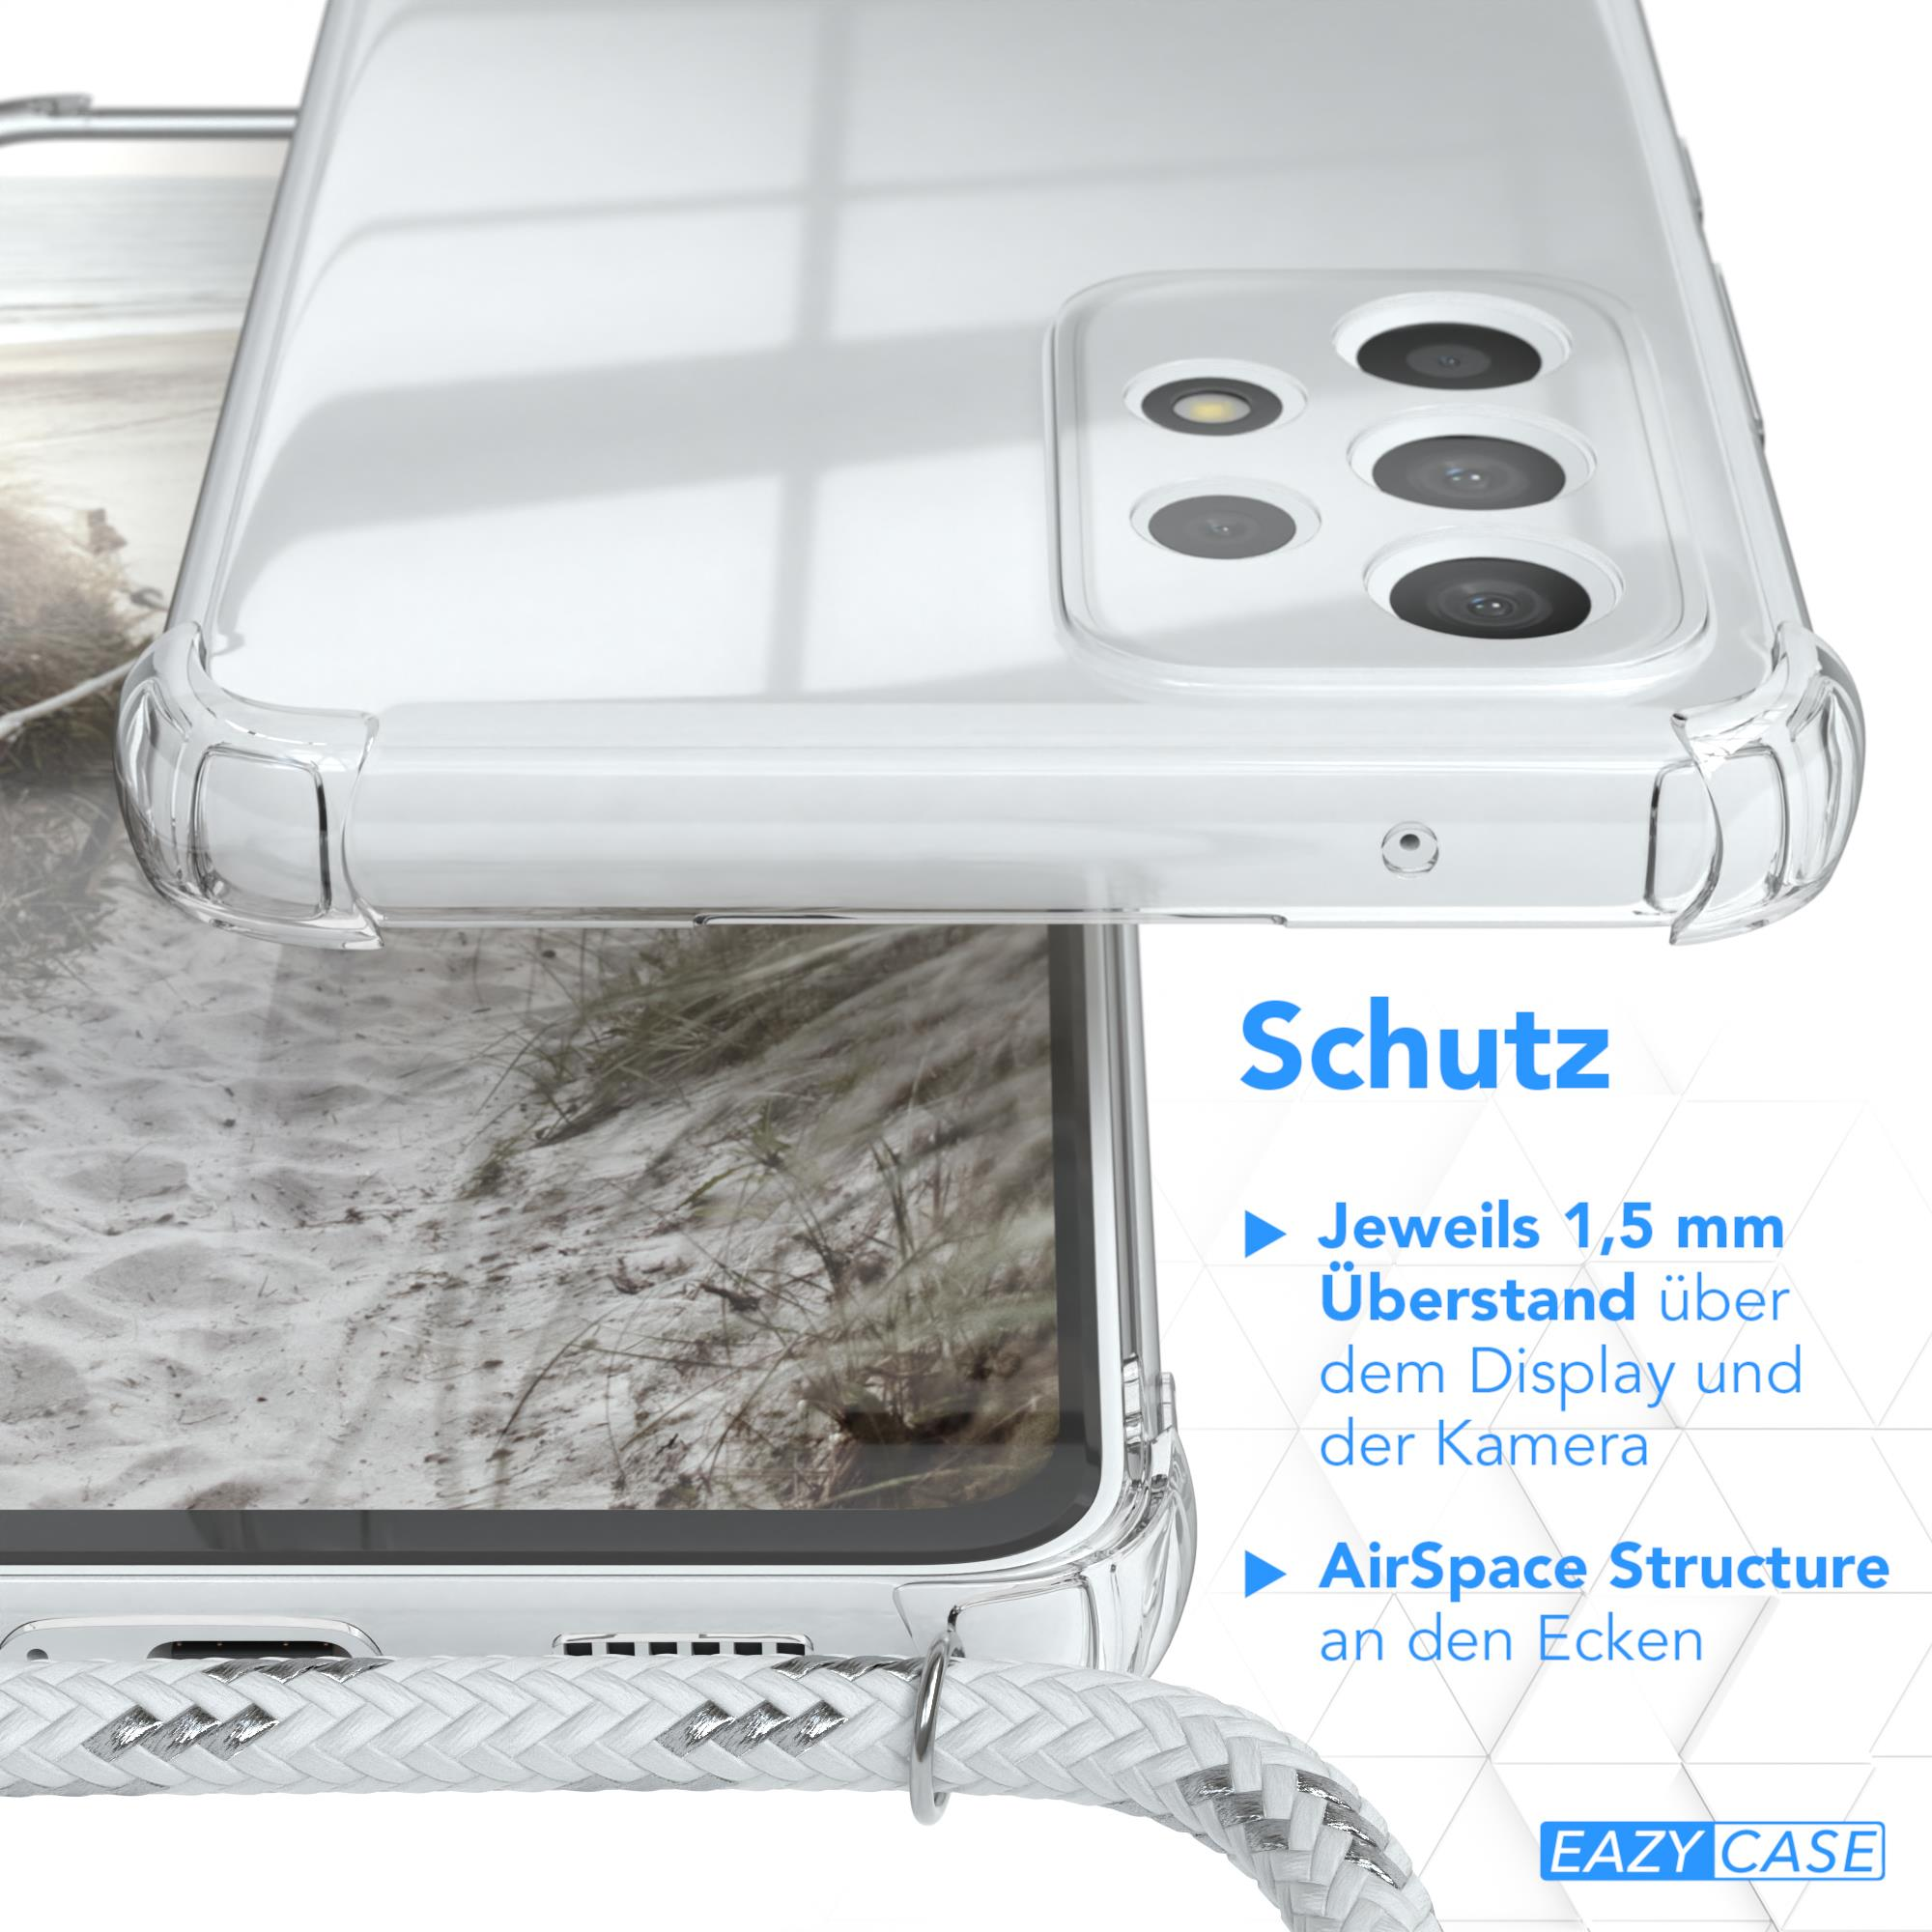 Umhängeband, Weiß Clear / Samsung, mit Galaxy Umhängetasche, Cover EAZY Clips CASE Silber A53 5G,